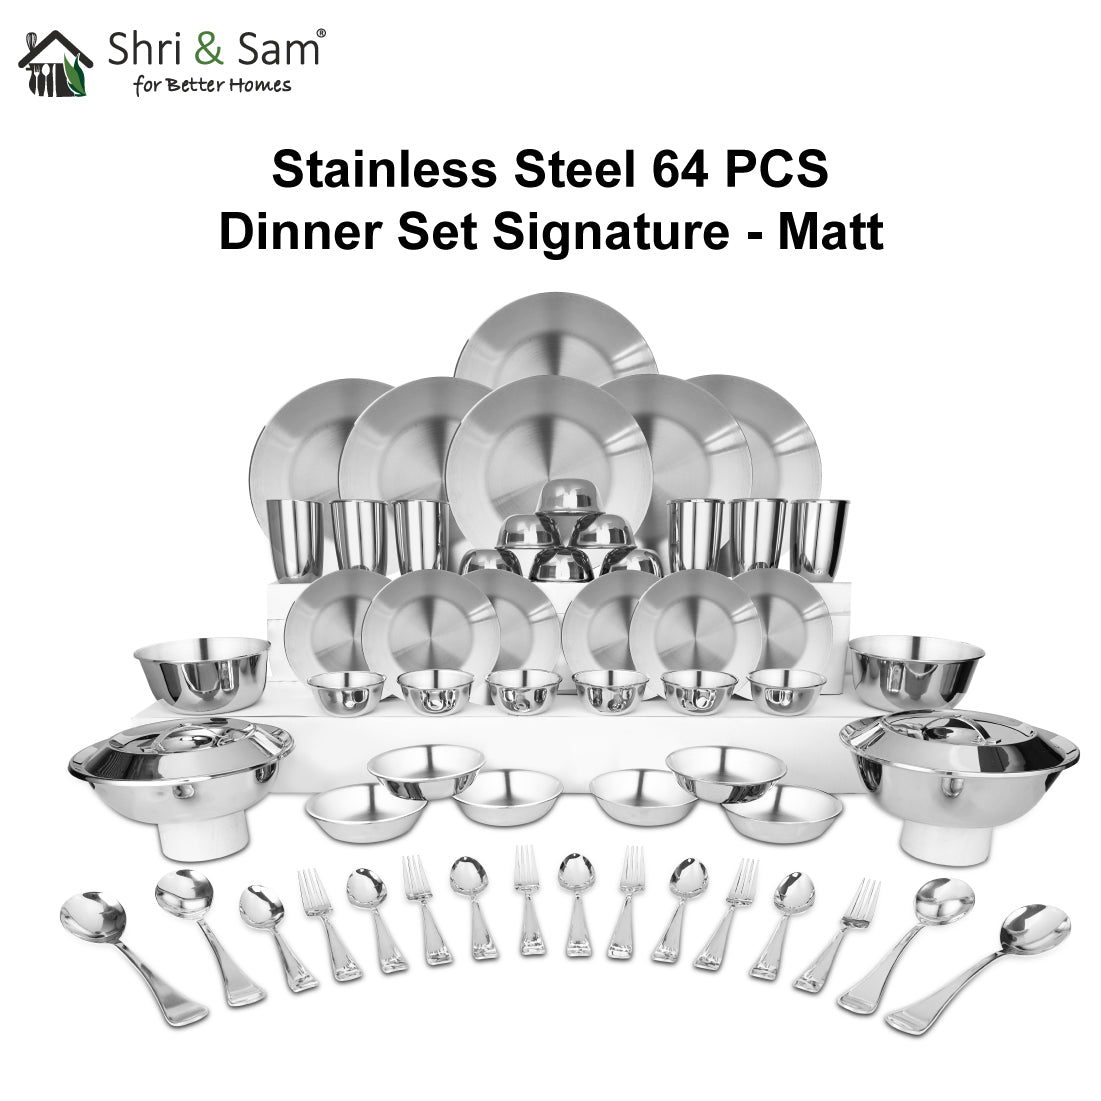 Stainless Steel 64 PCS Dinner Set (6 People) Signature - Matt